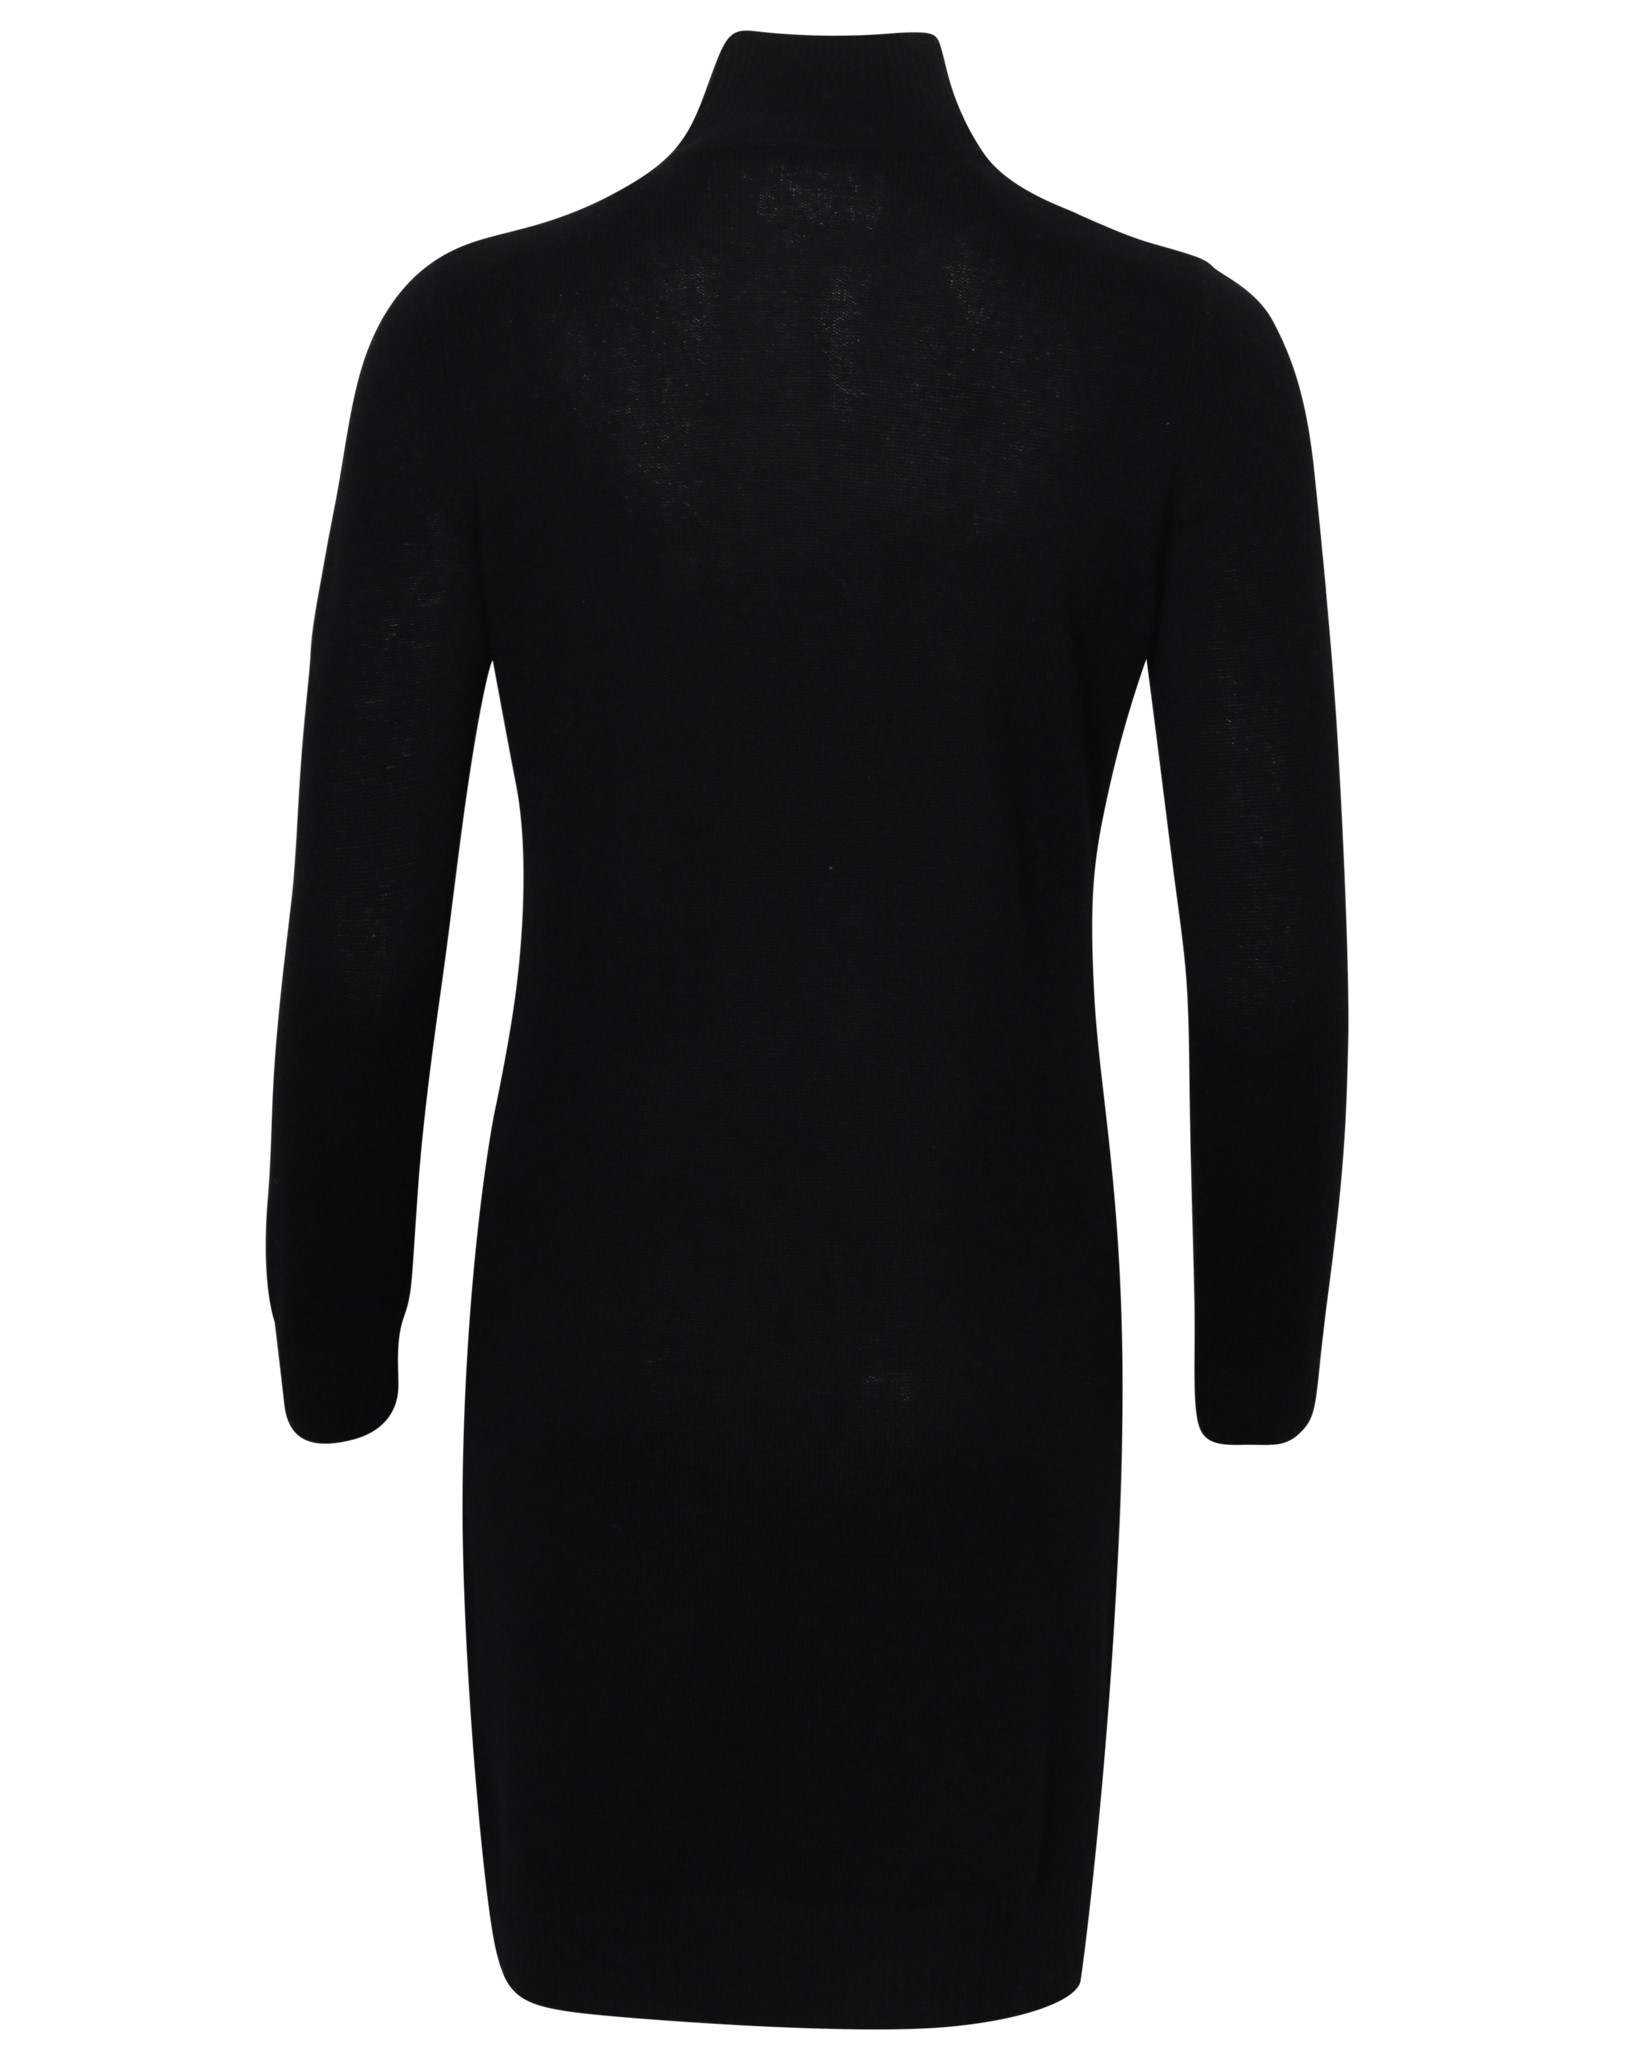 ABSOLUT CASHMERE Dress Cecilia in Black XS